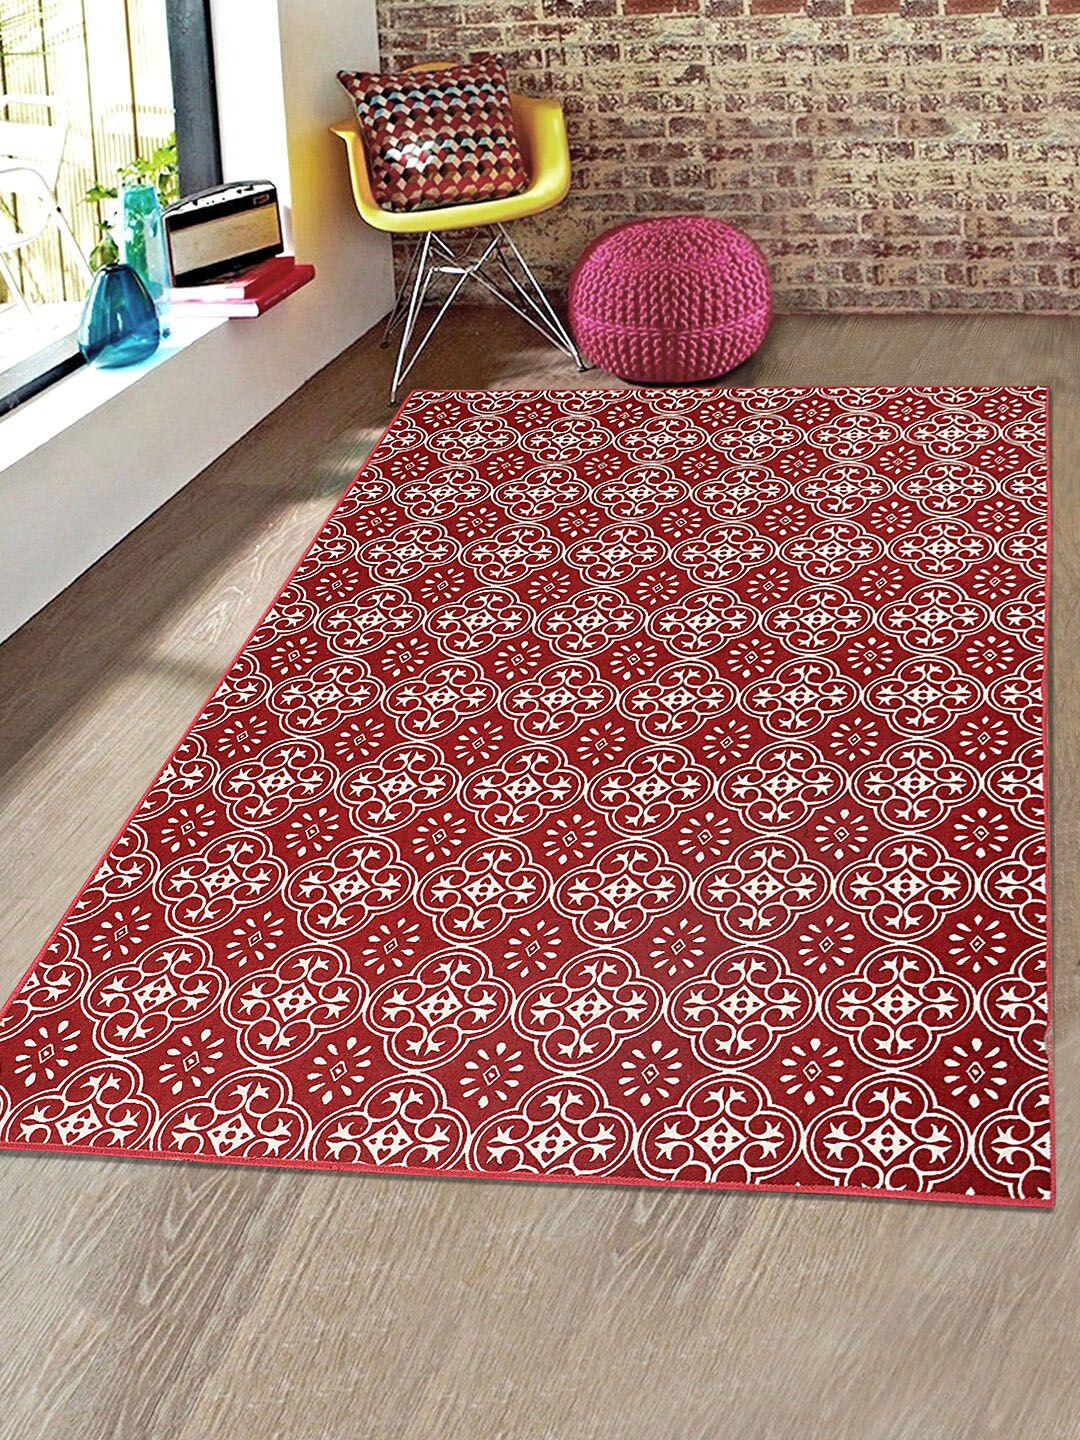 Saral Home Red & Off-White Ethnic Motifs Jacquard Anti-Skid Carpet Price in India